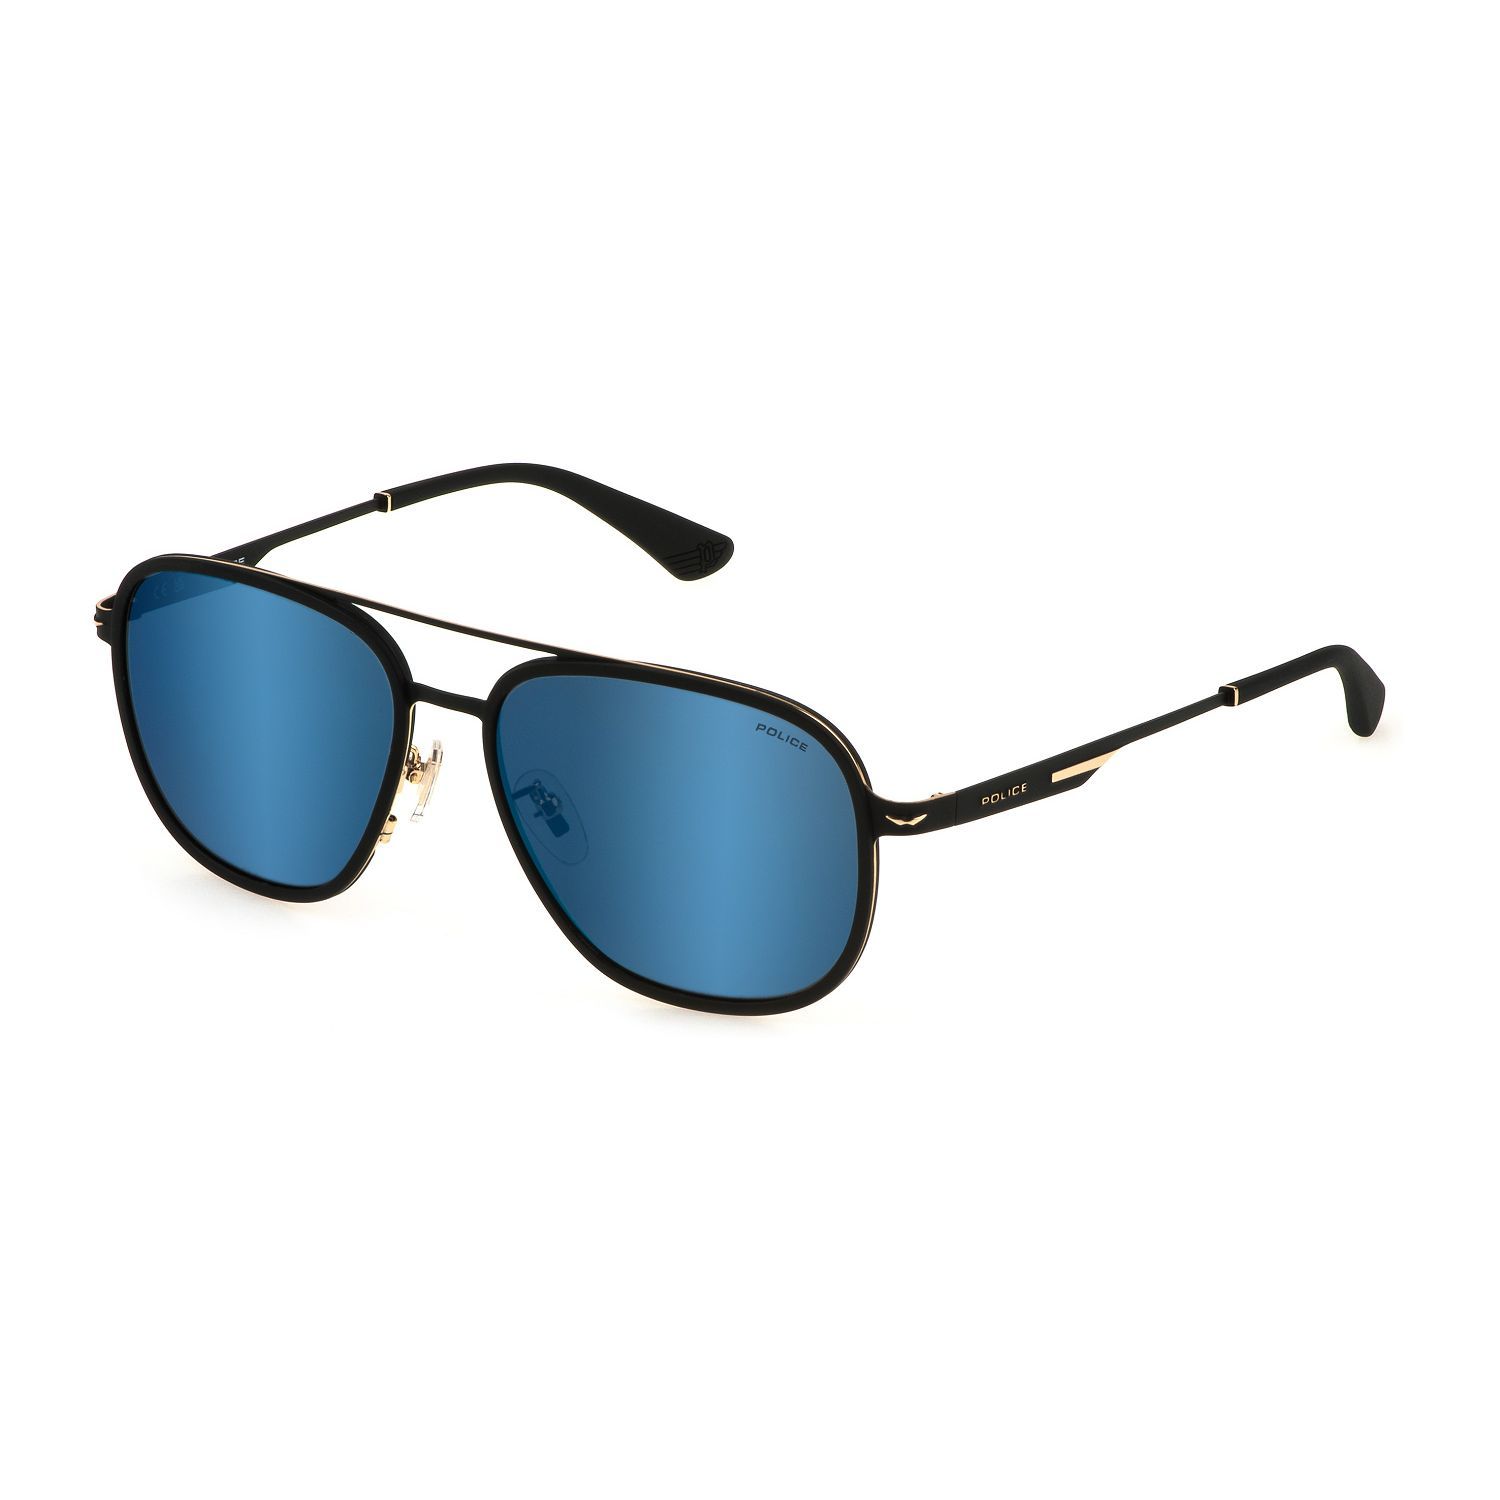 SPLL78M Square Sunglasses 302B - size 58